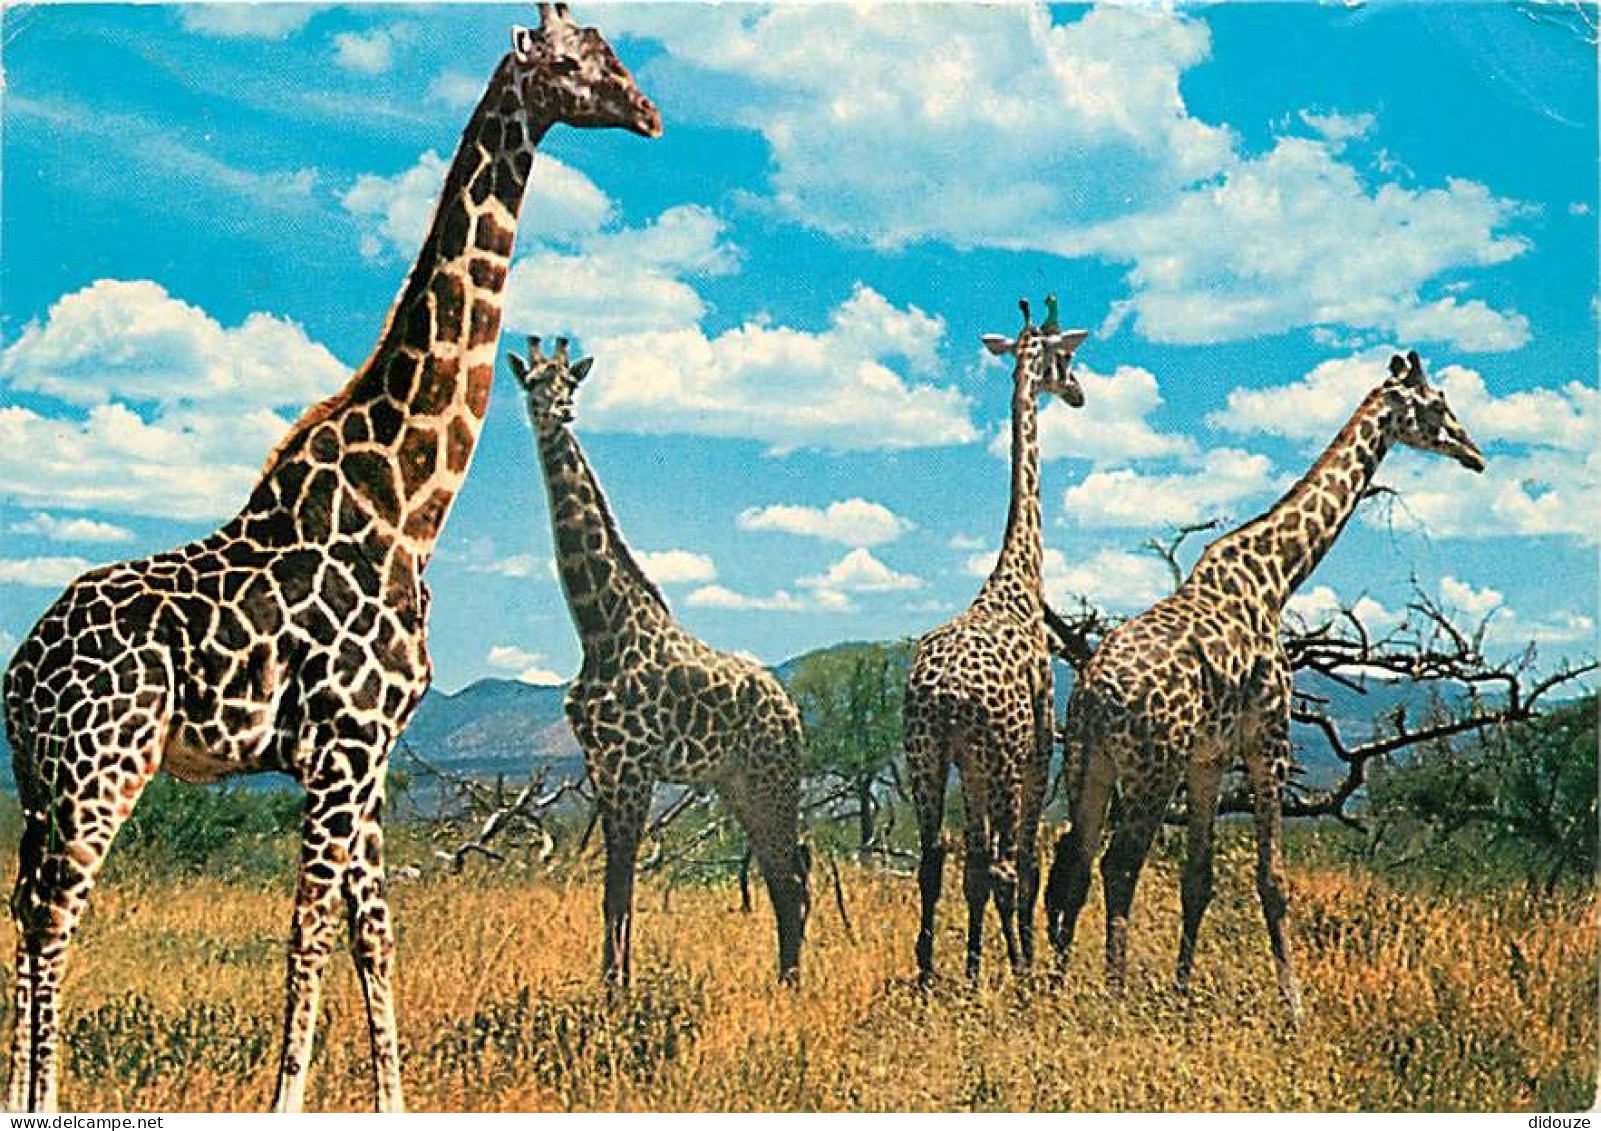 Animaux - Girafes - Wildlife - East Africa - Voir Timbre Du Kenya - Etat Léger Pli Visible - CPM - Voir Scans Recto-Vers - Giraffes